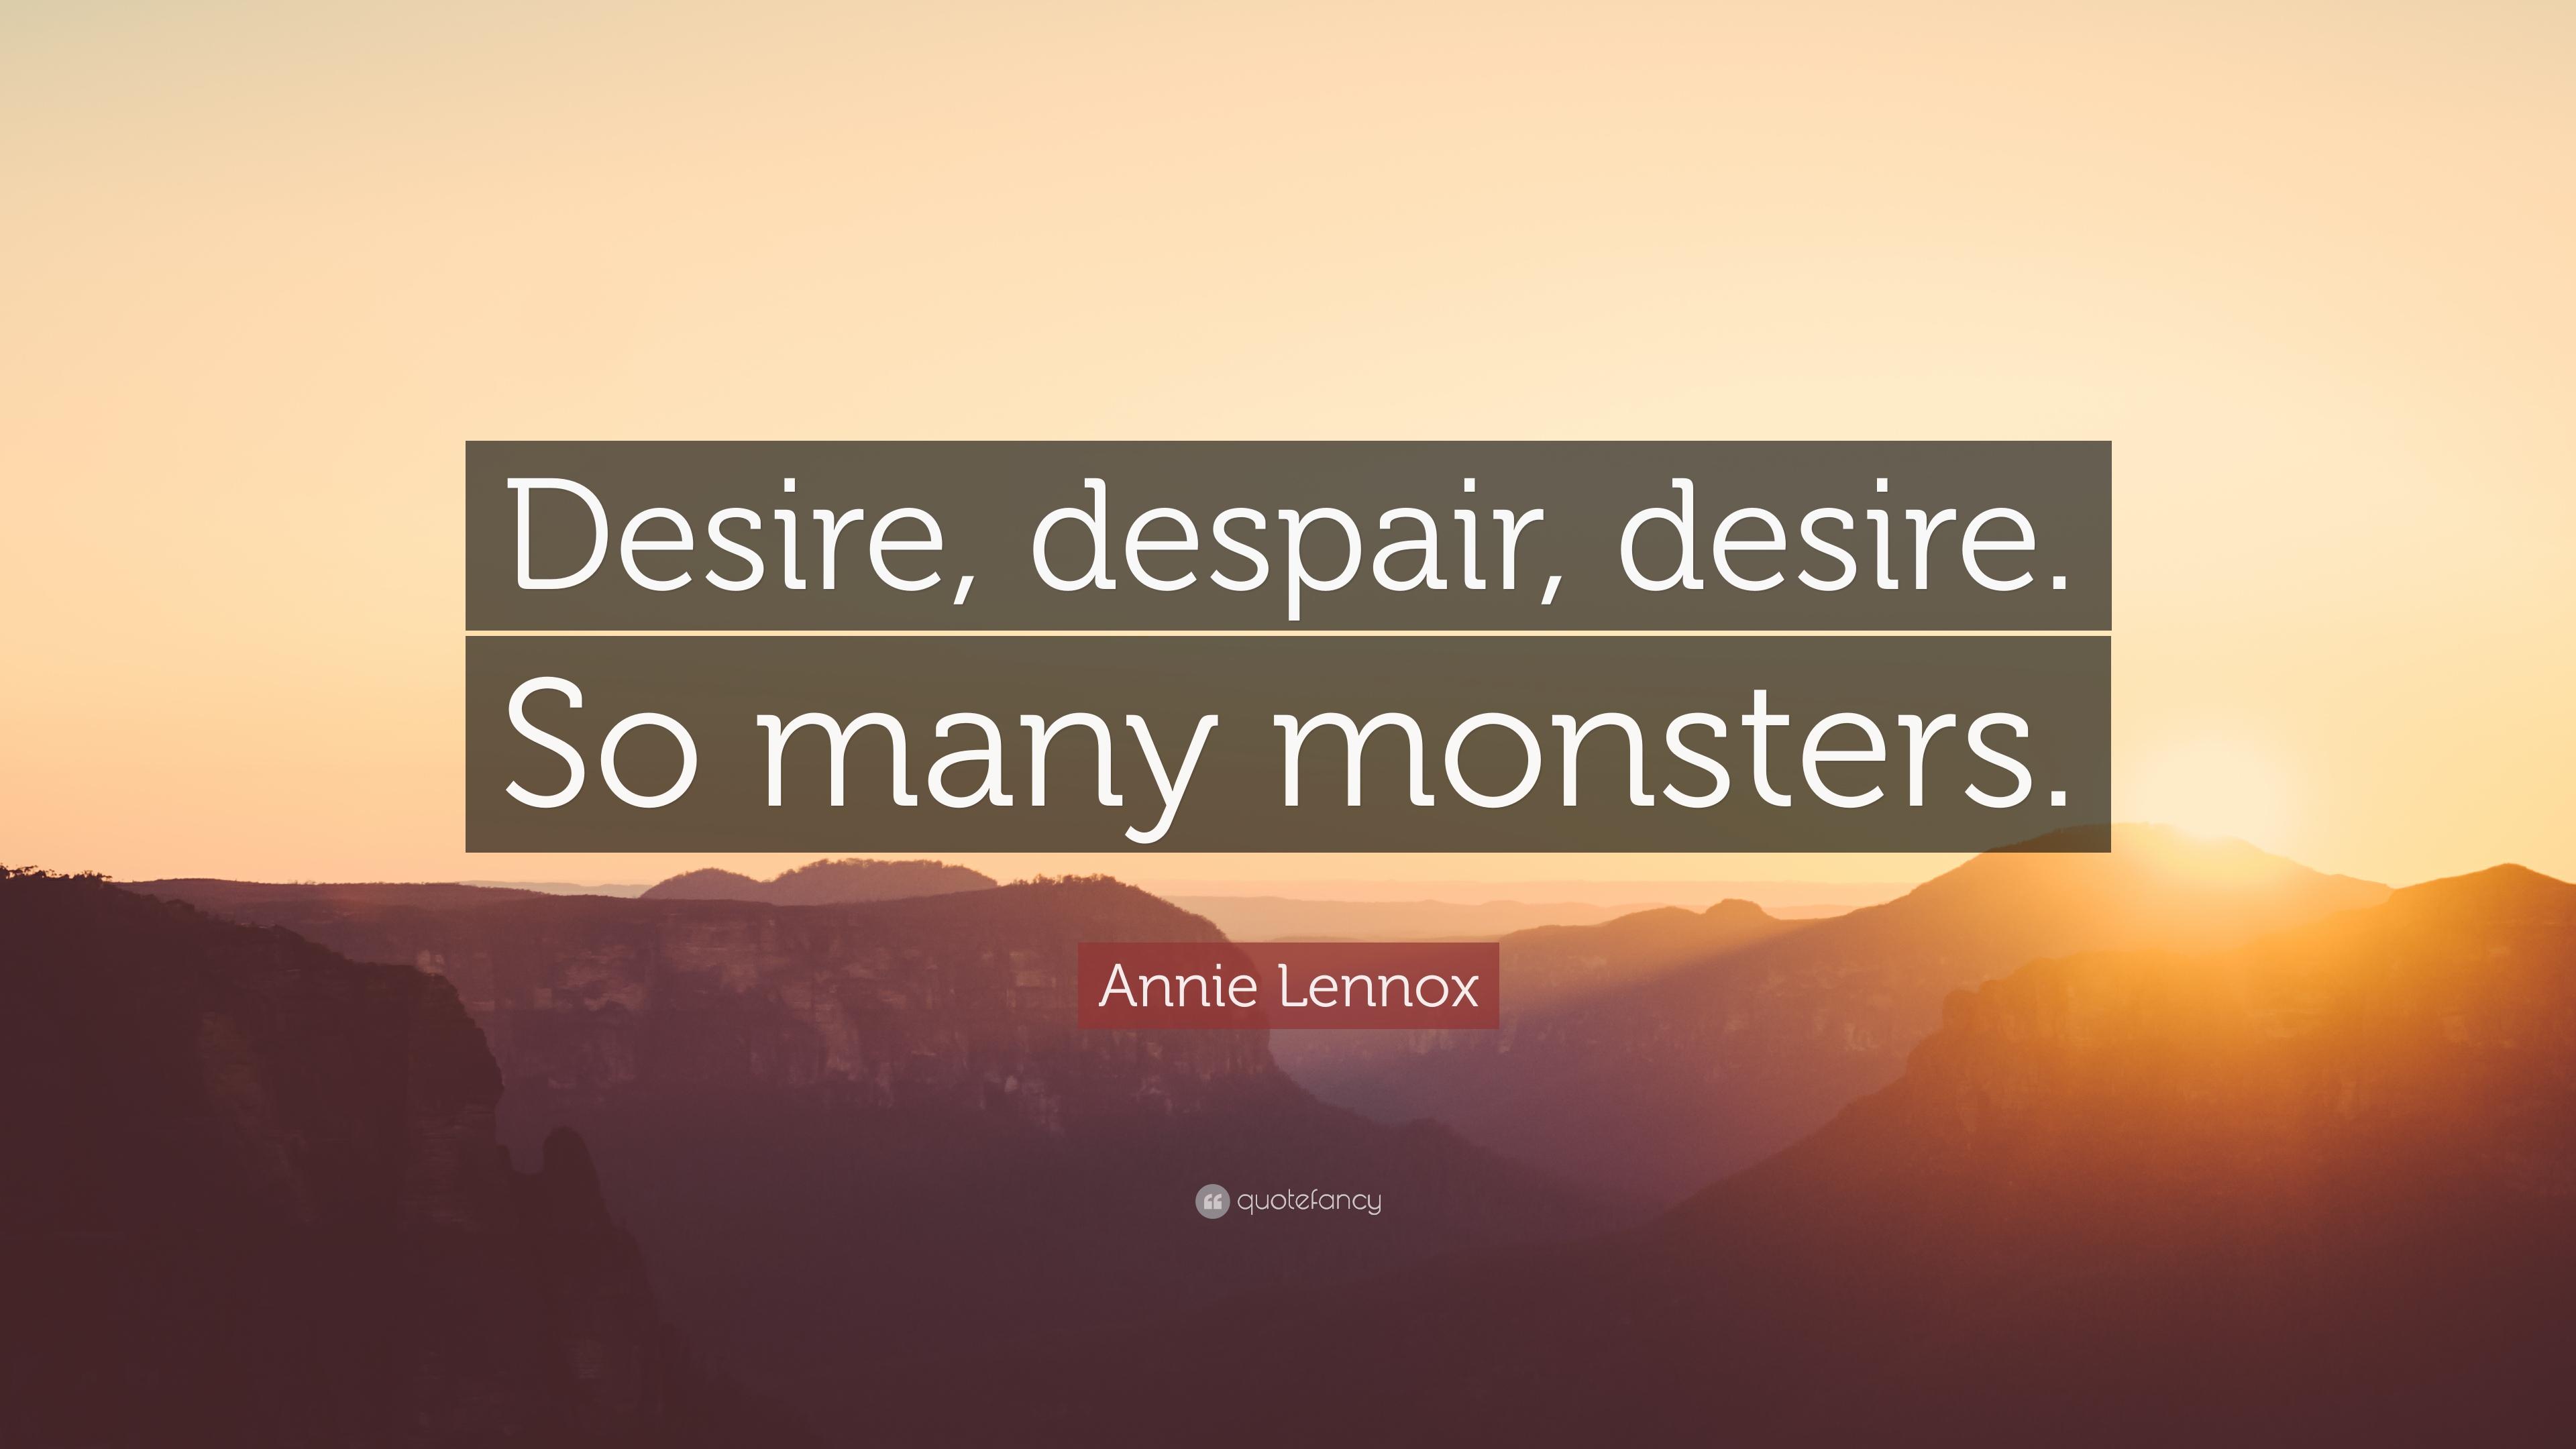 Annie Lennox Quote: “Desire, despair, desire. So many monsters.” 7